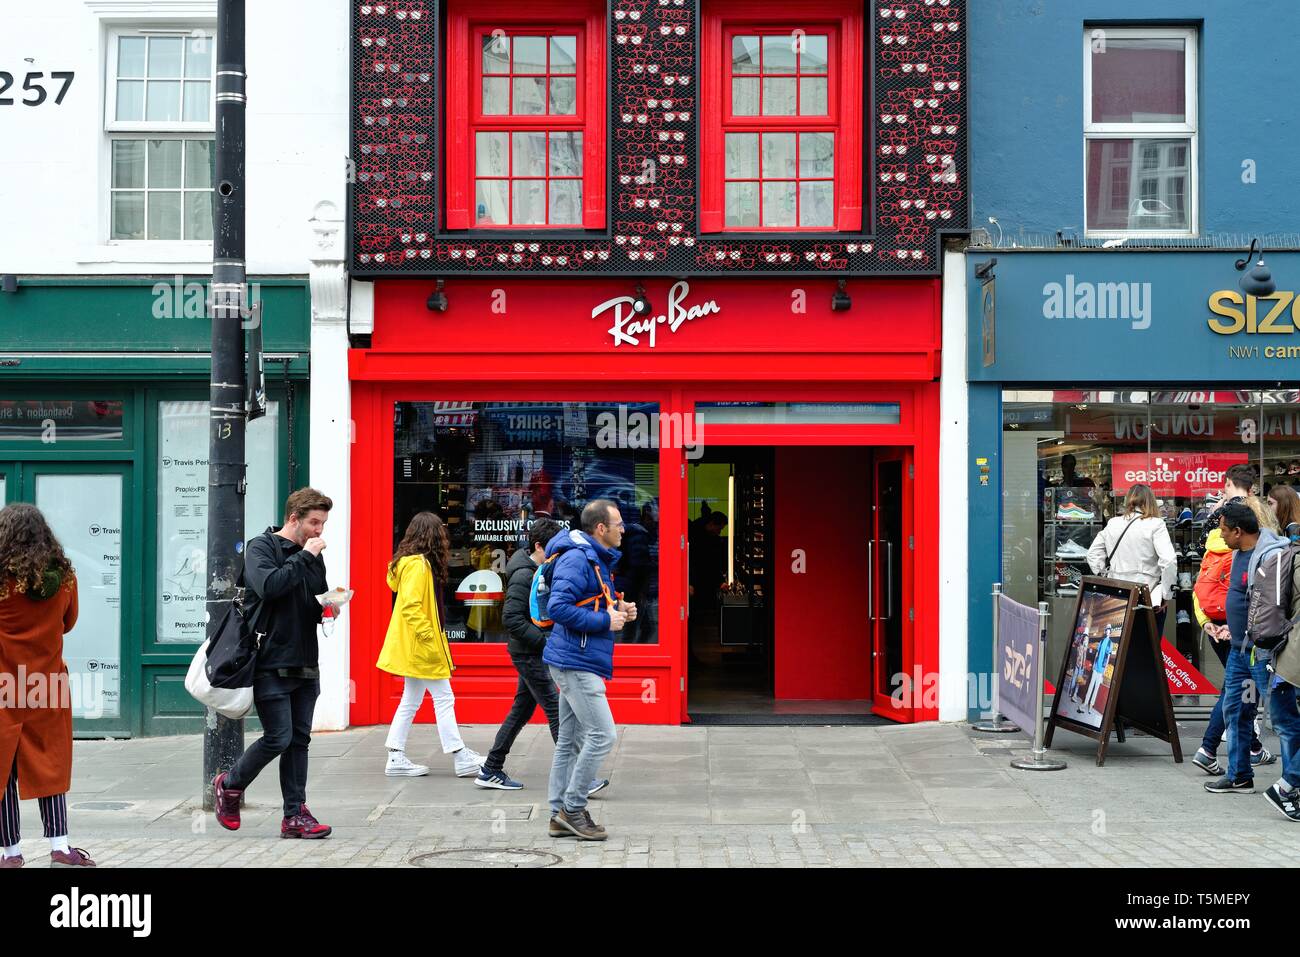 ray ban shop carnaby street